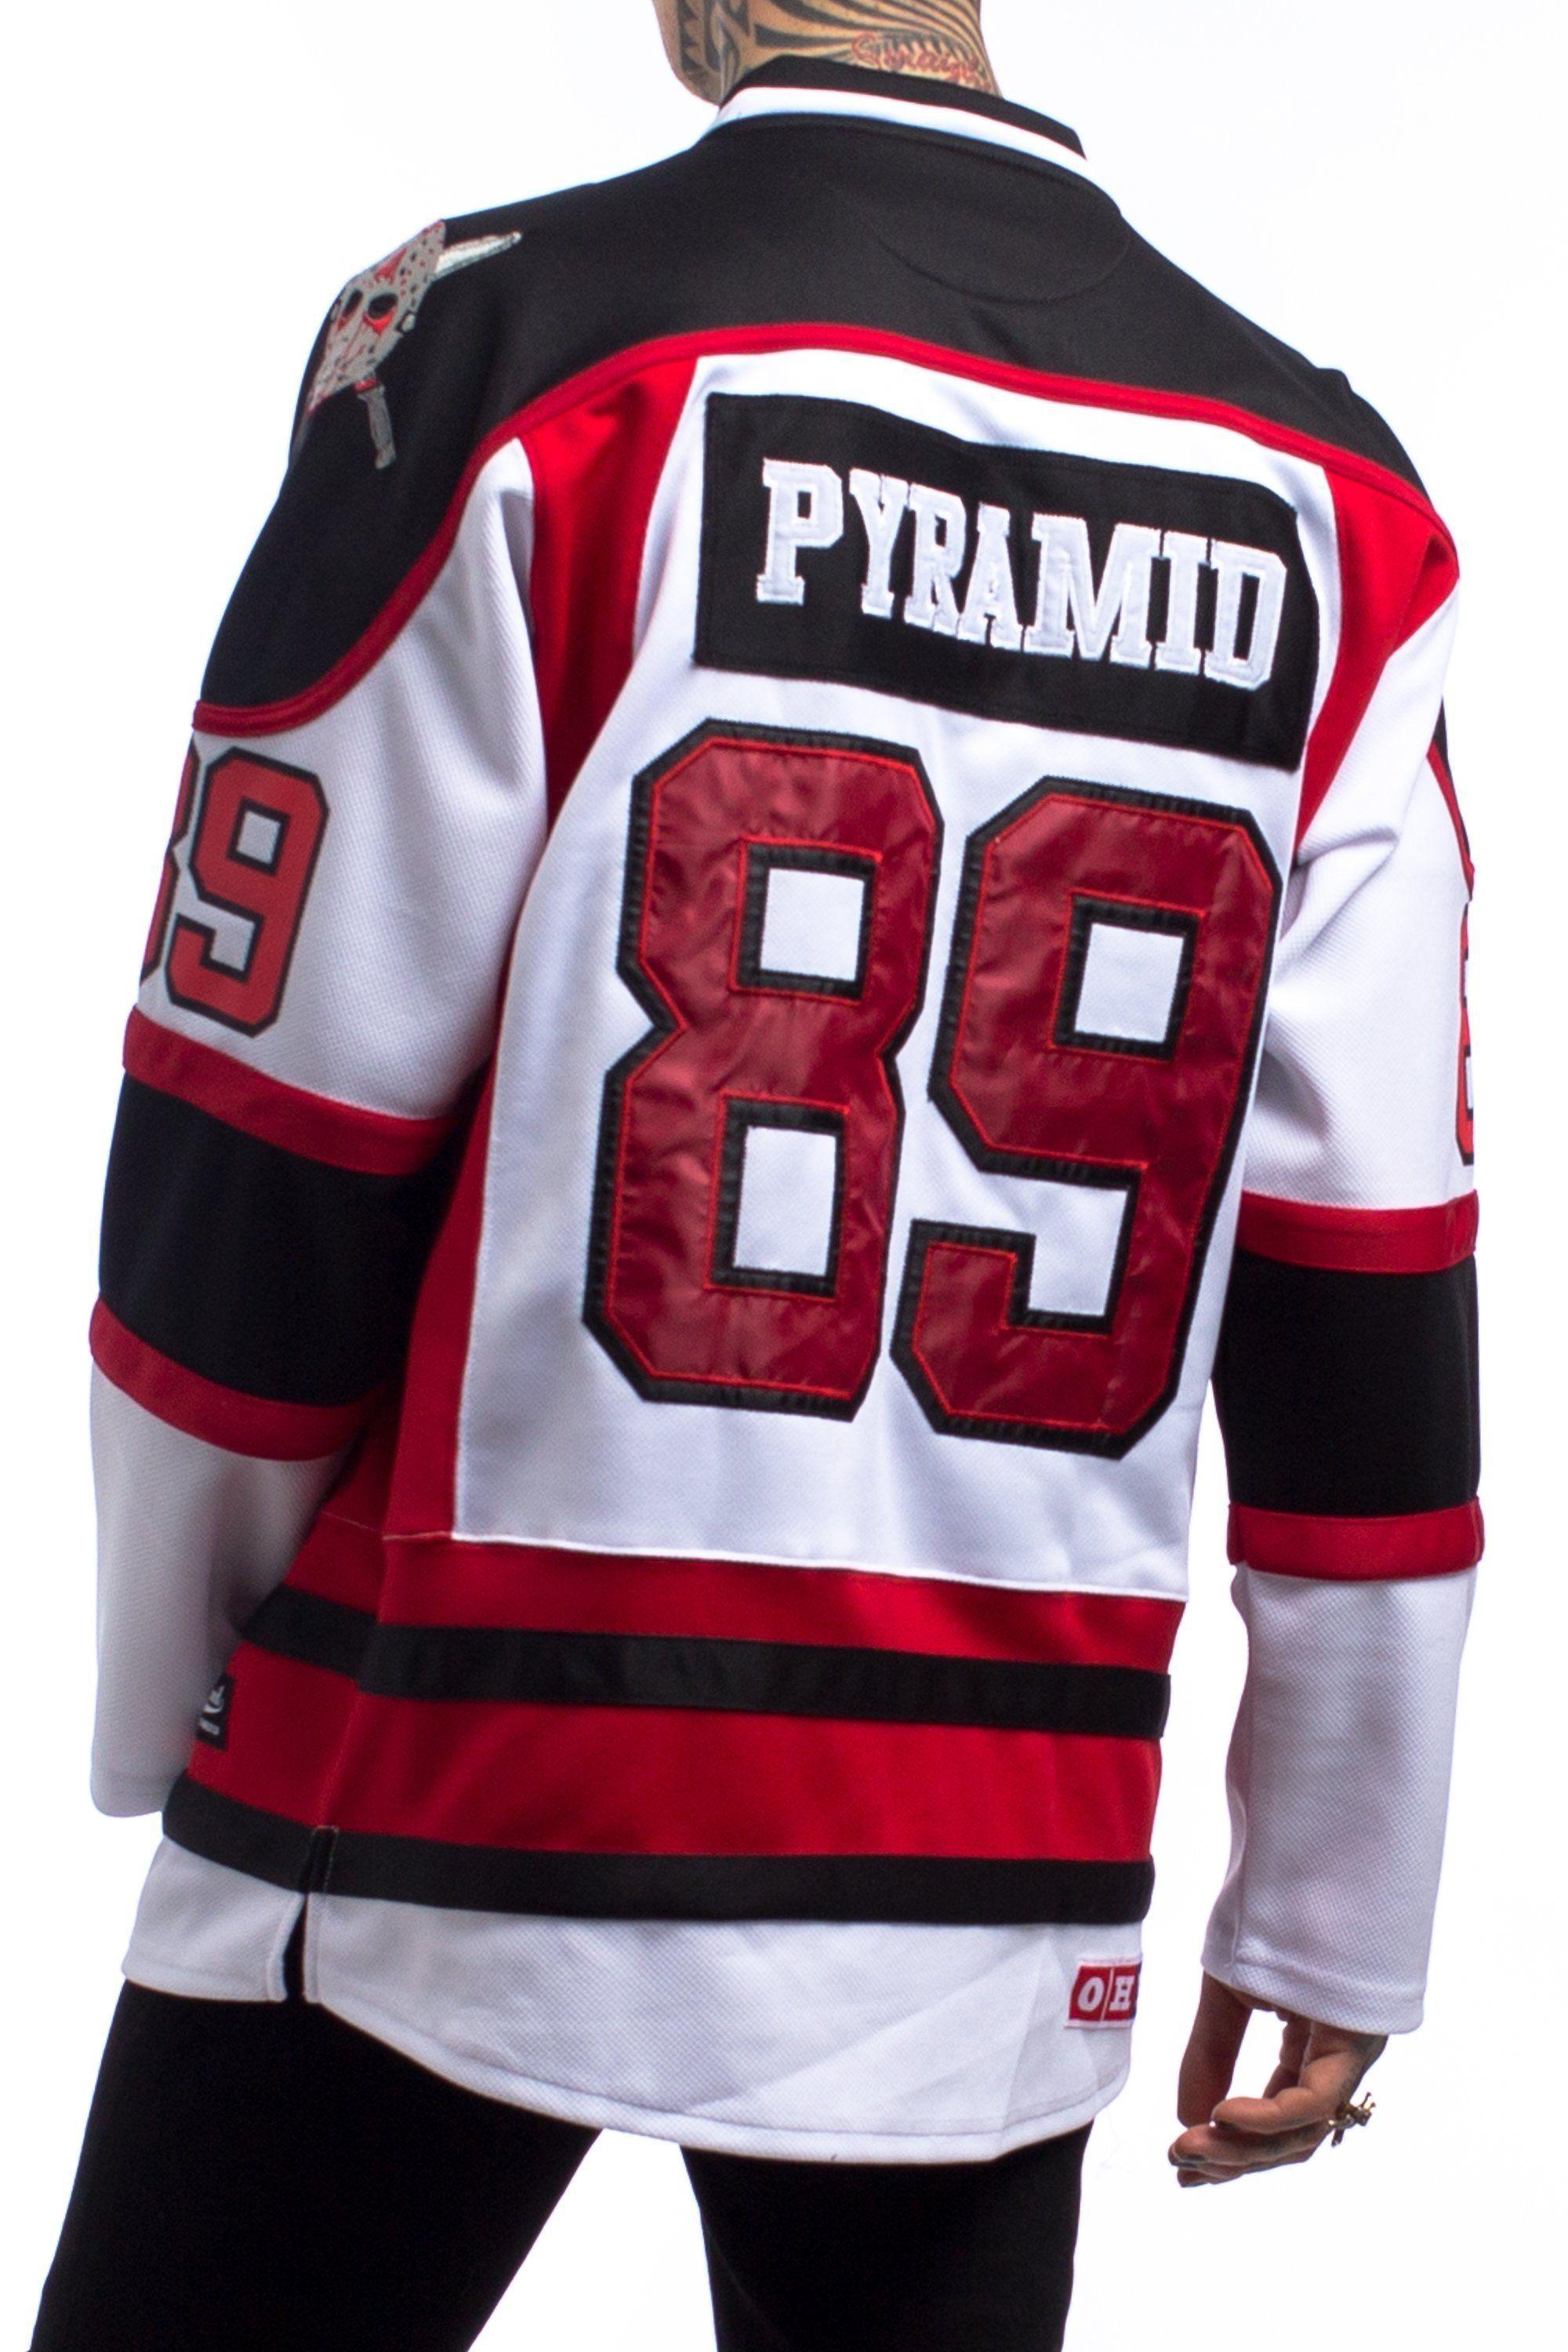 Black Pyramid Clothing Logo - BP Mask Hockey Jersey. Black Pyramid Clothing